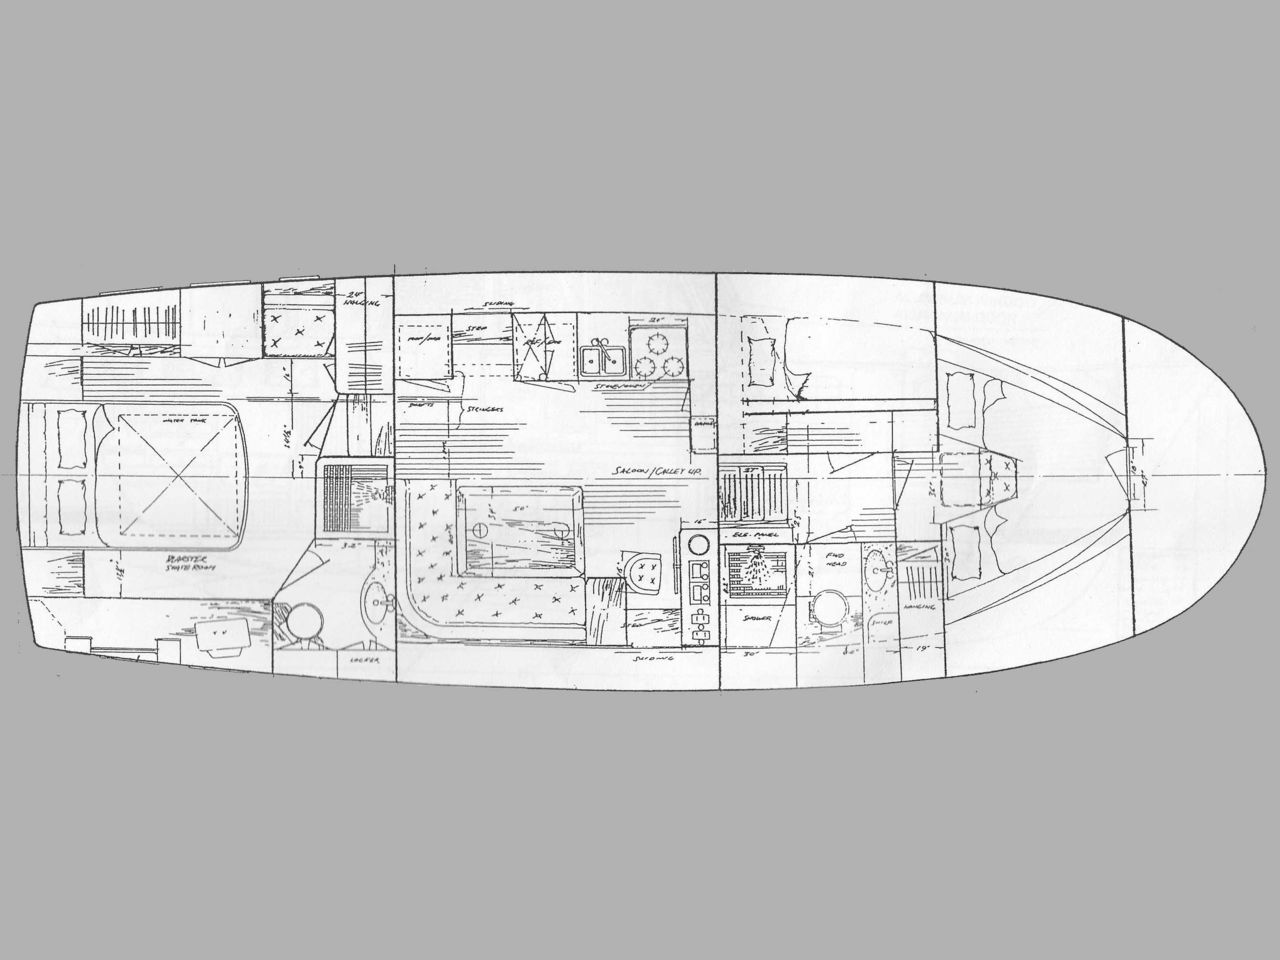 CA-Yachts Classic Adria Trawler - fotka 3